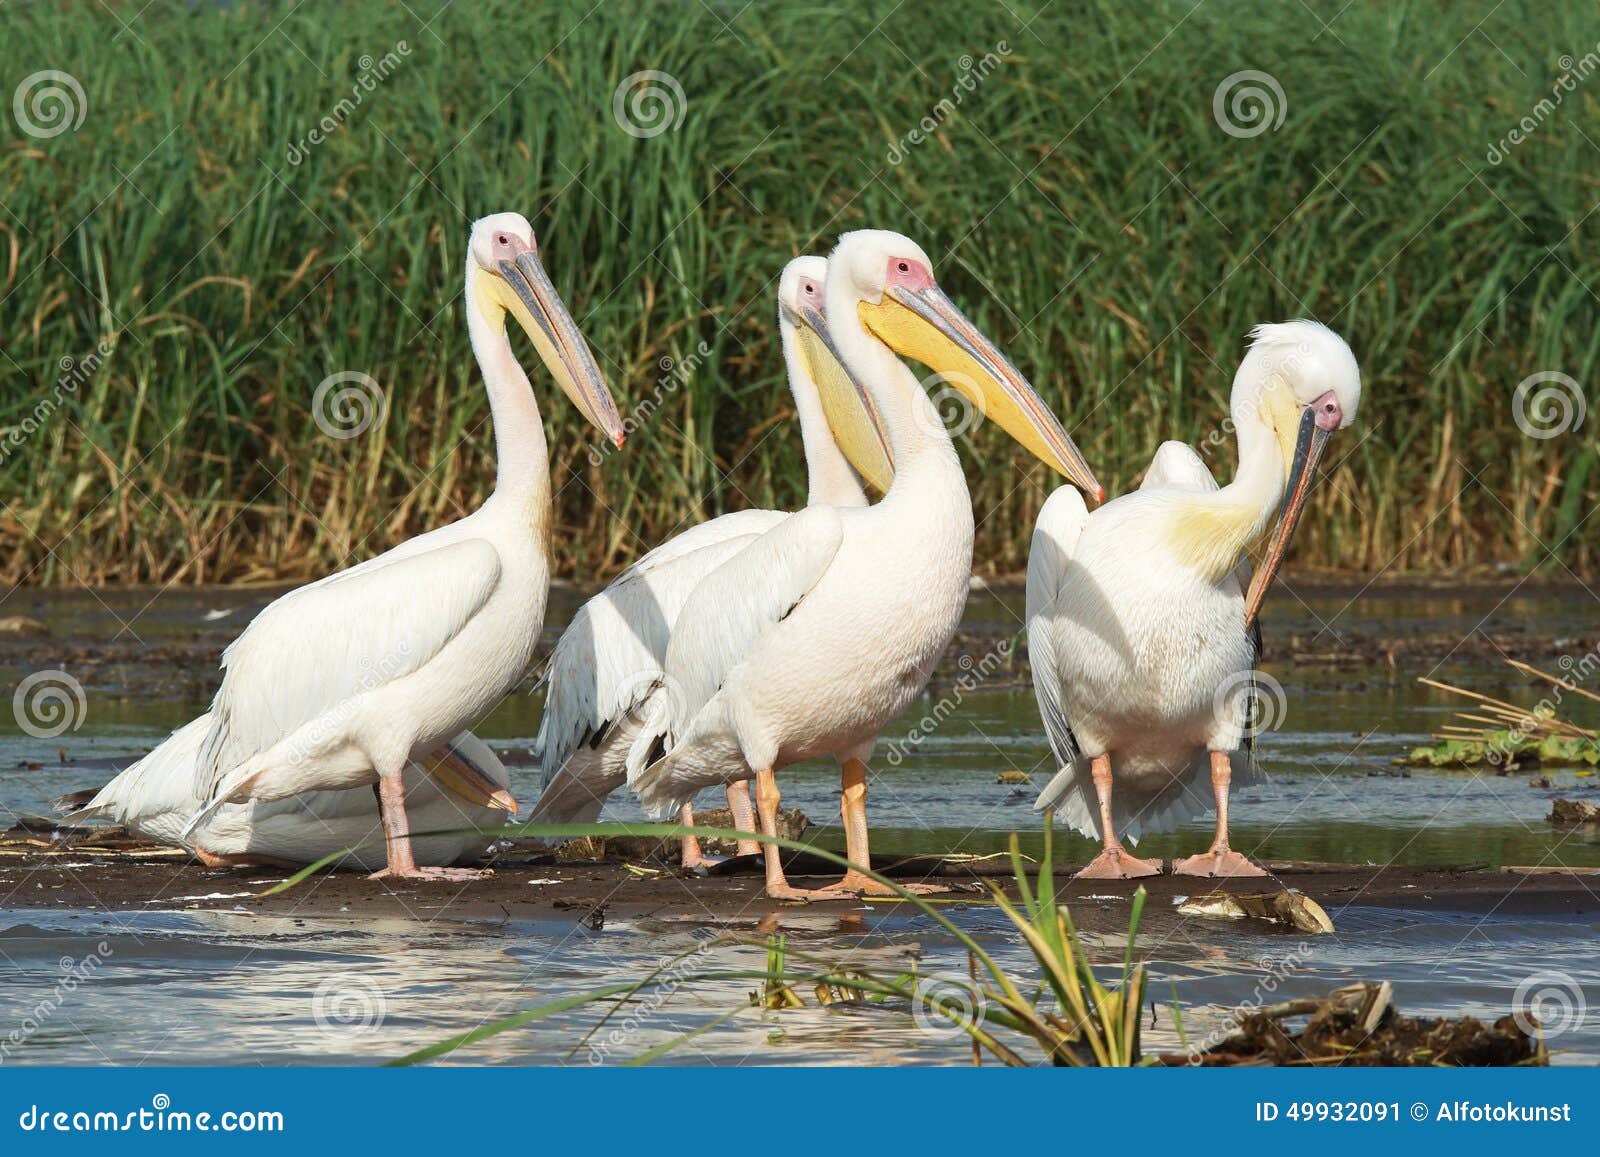 pelican, lake chamo, ethiopia, africa